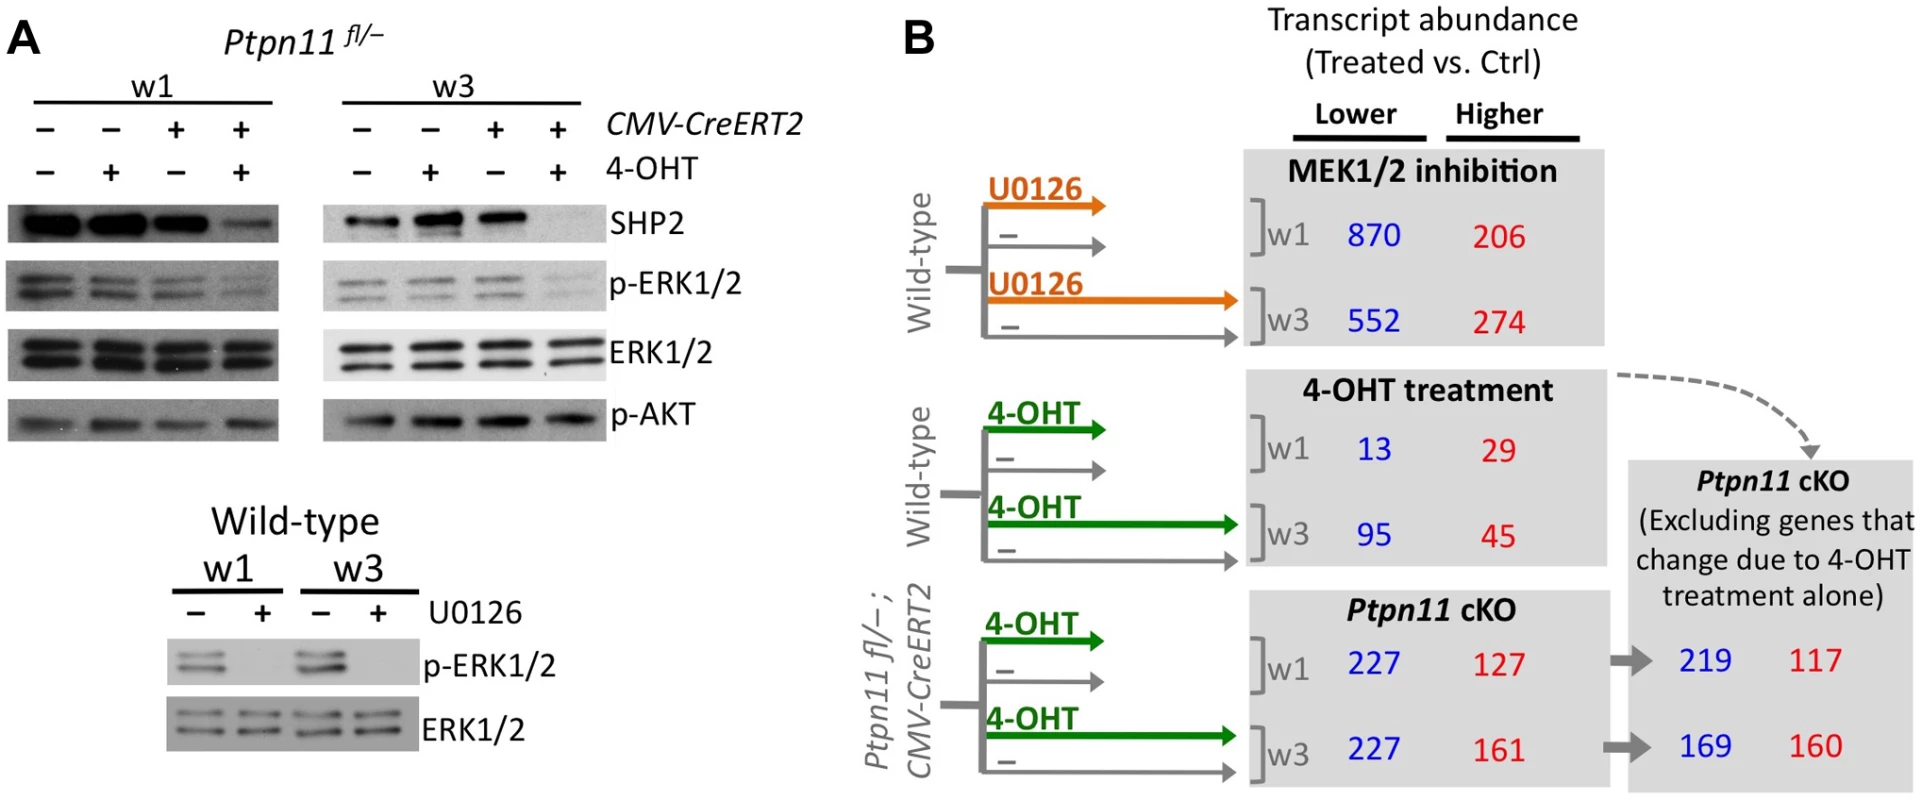 Identifying transcripts that change in abundance following SHP2 depletion or MEK1/2 inhibition in pellet cultures.